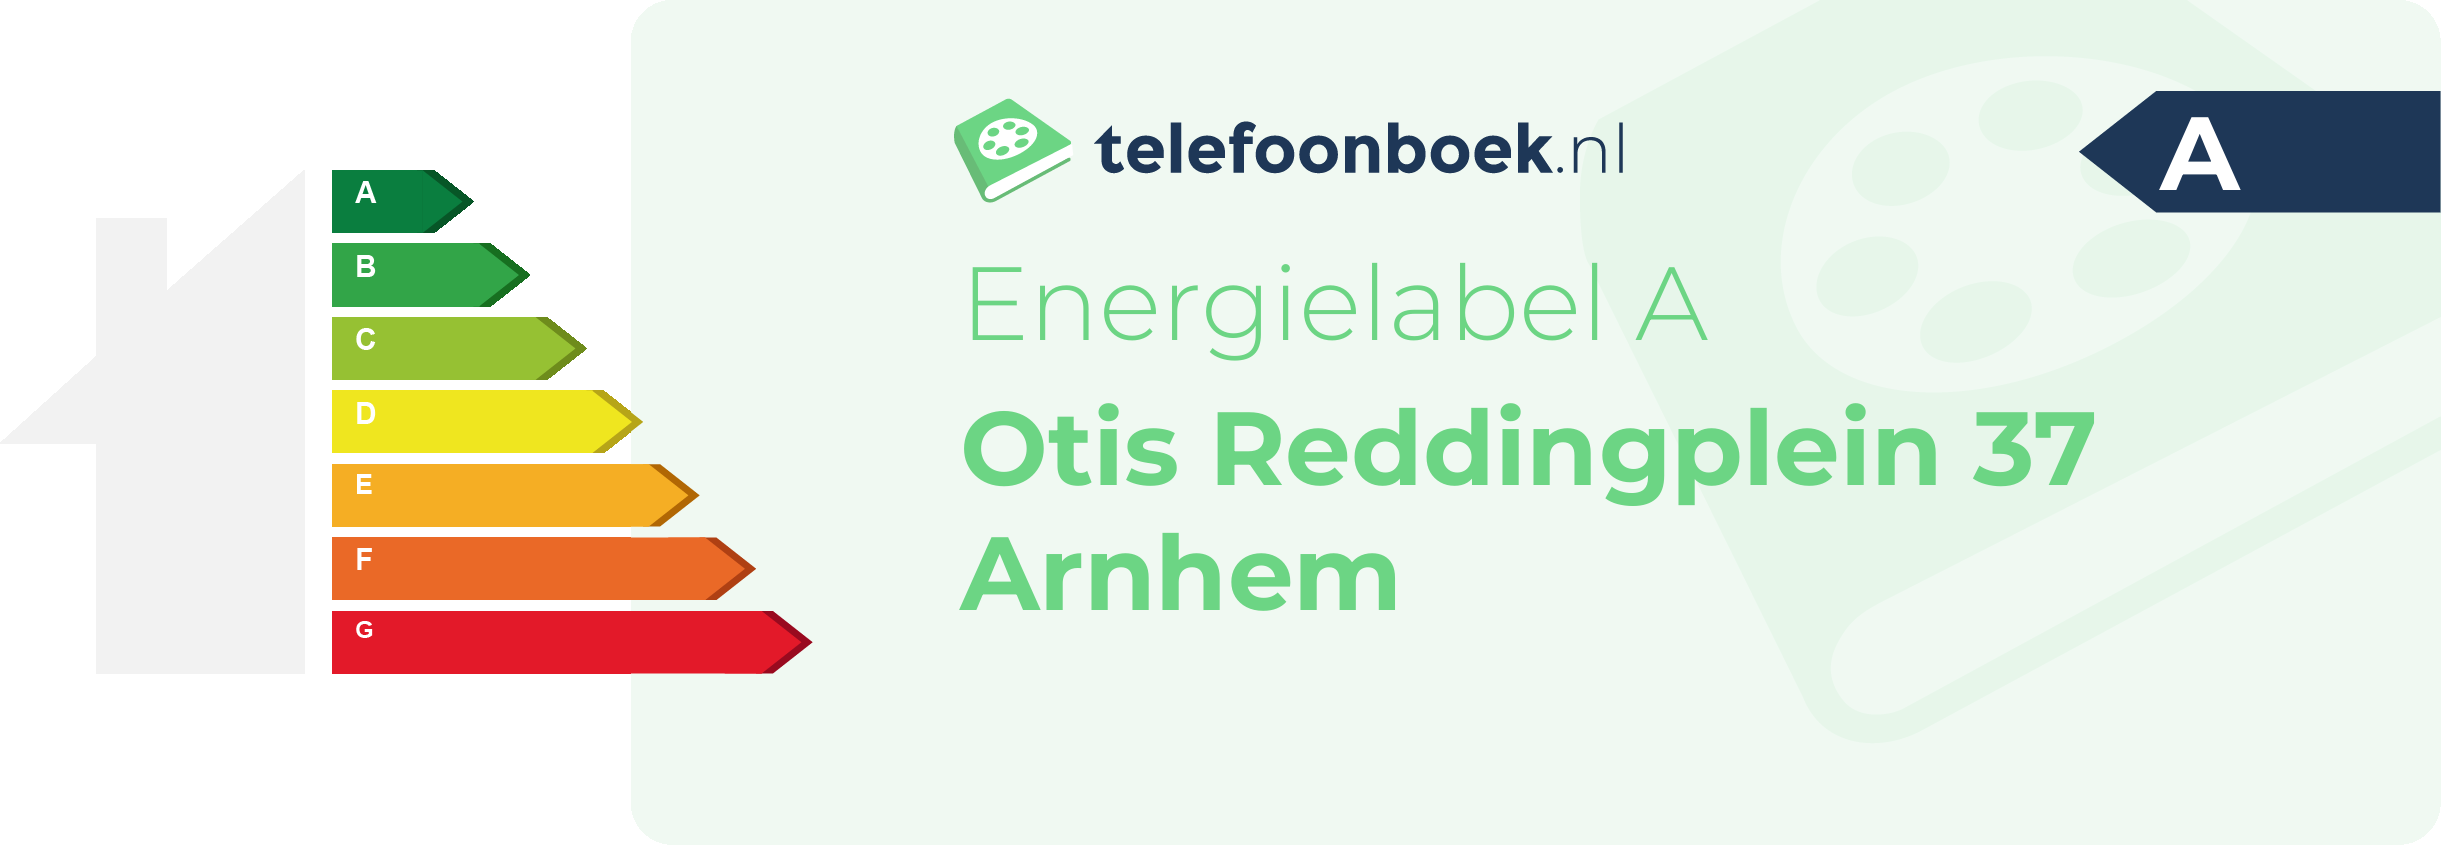 Energielabel Otis Reddingplein 37 Arnhem